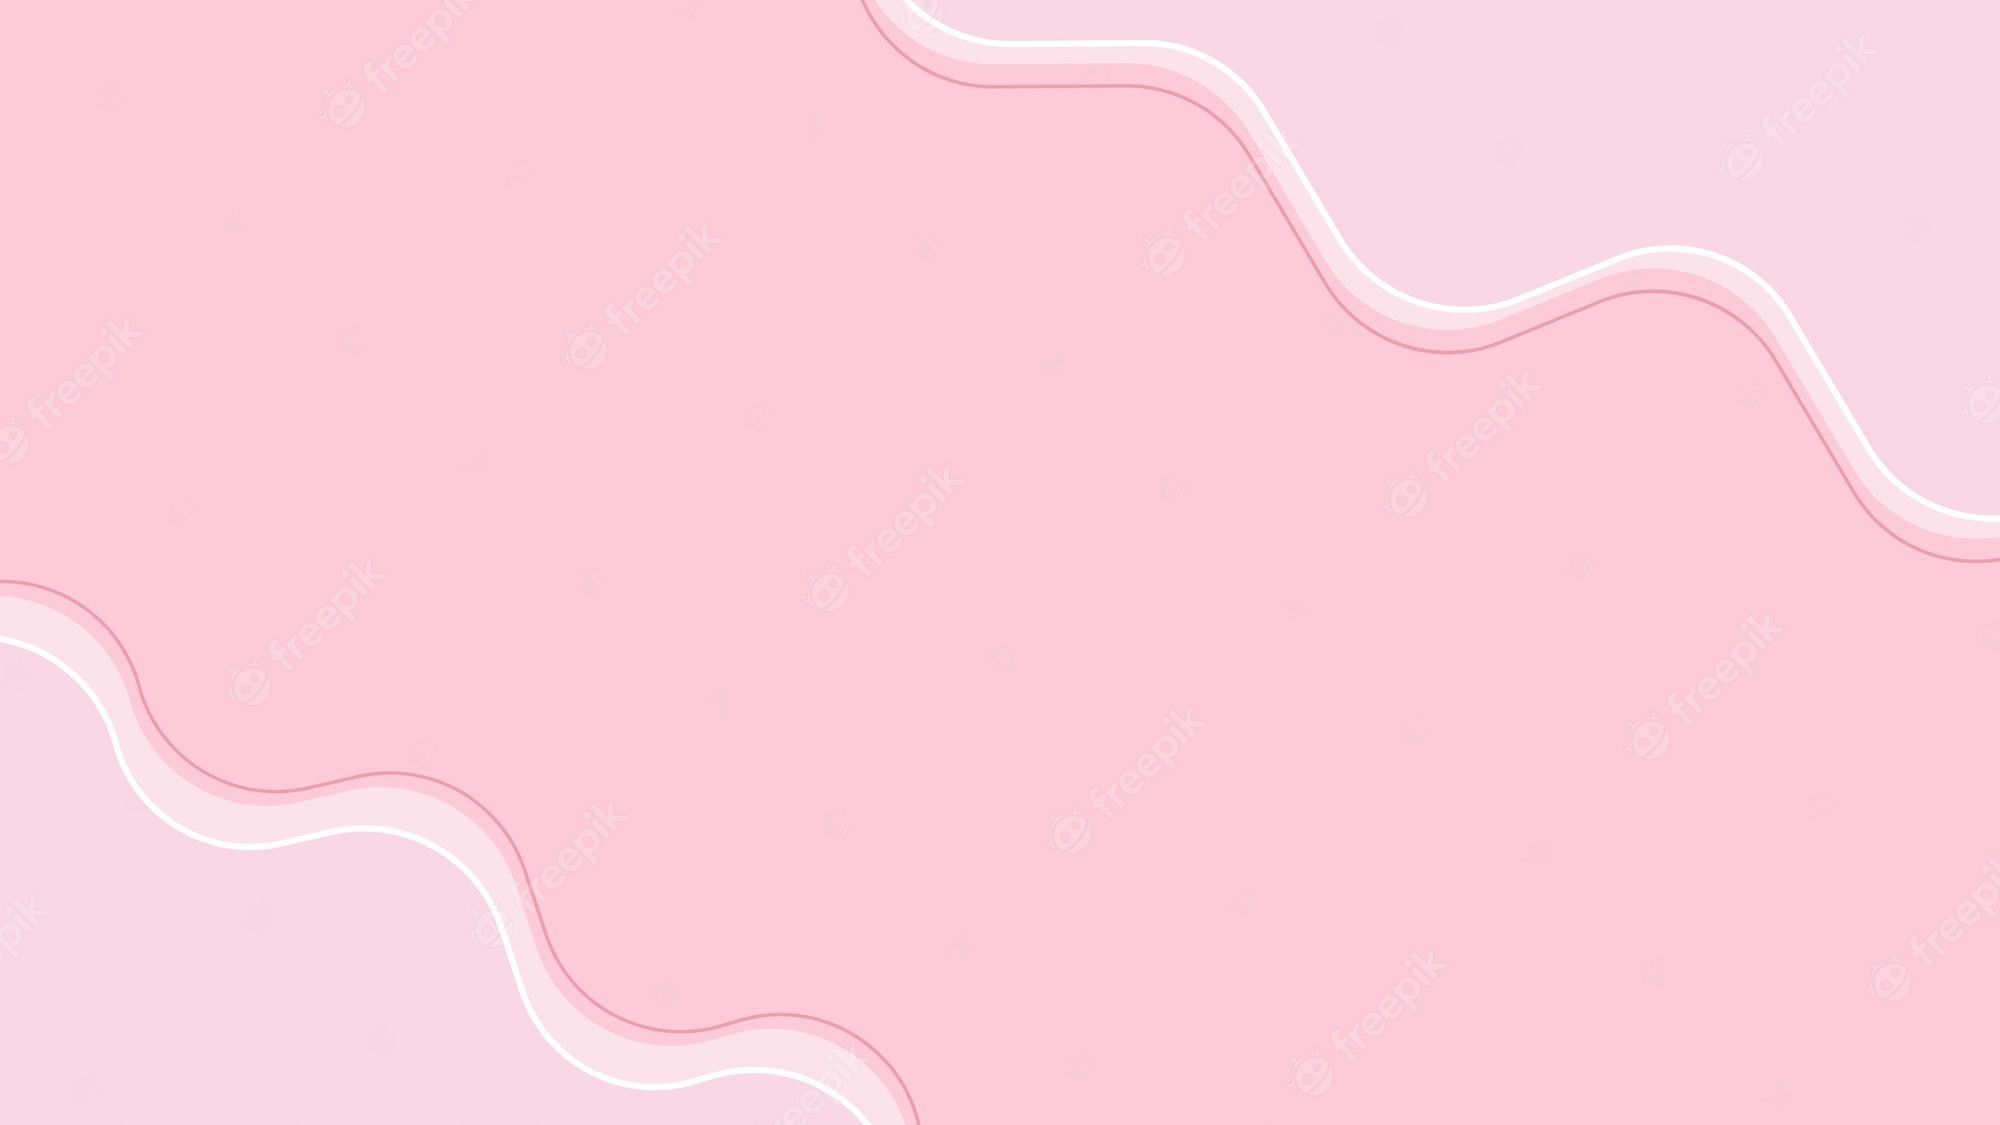  Rosa Hintergrundbild 2000x1125. Premium Vector. Aesthetic minimal cute pastel pink wallpaper illustration perfect for wallpaper backdrop postcard background banner